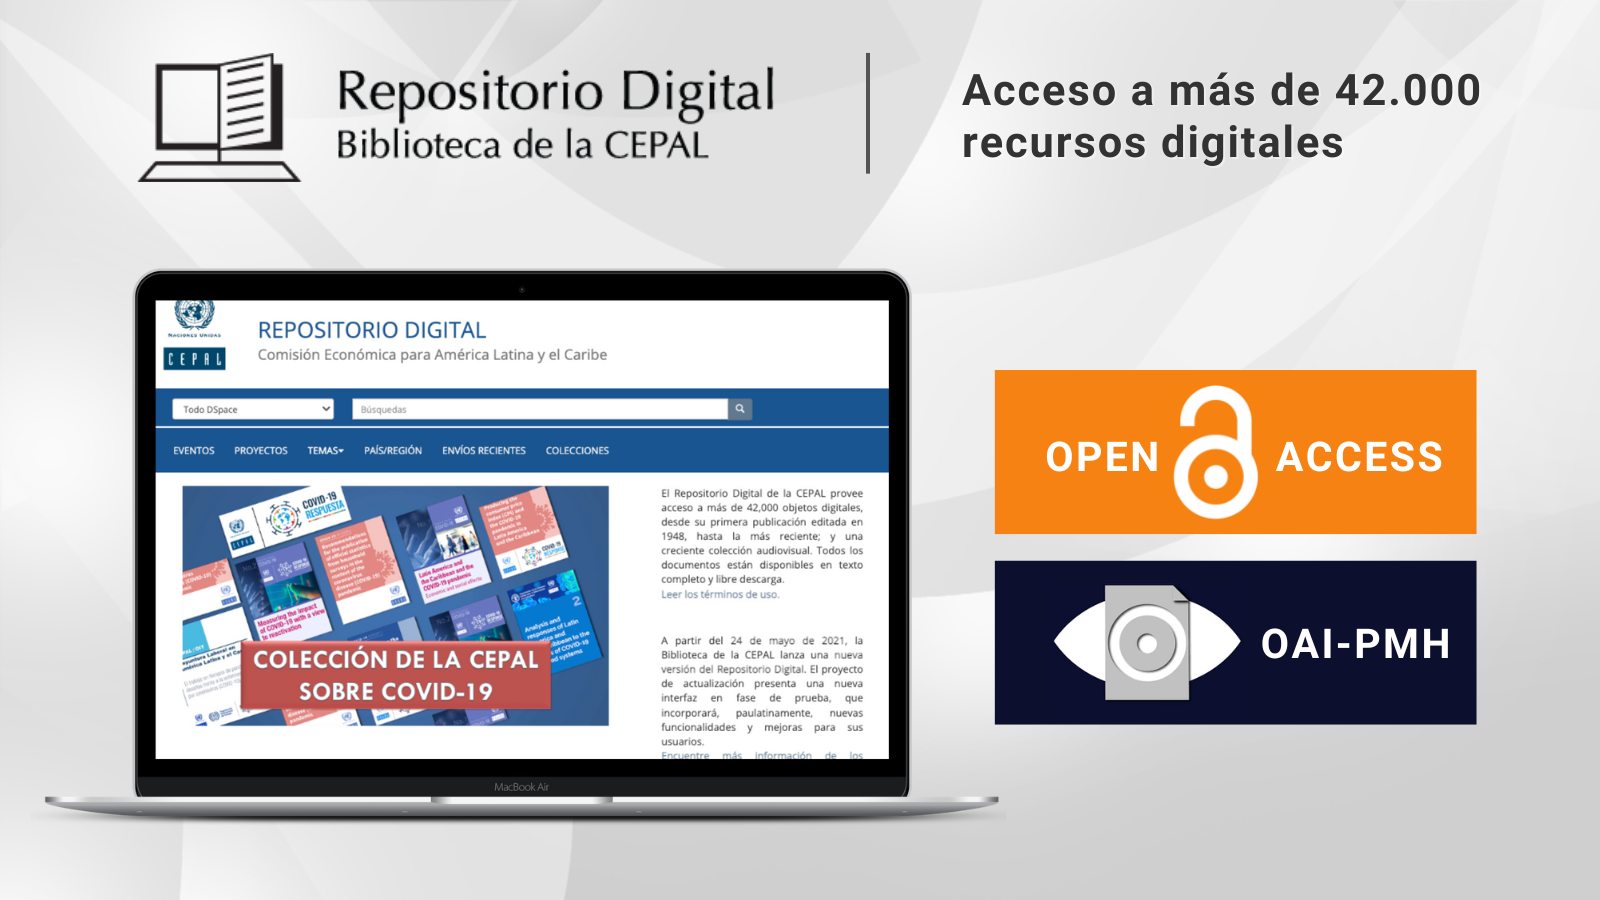  Repositorio Digital de la CEPAL